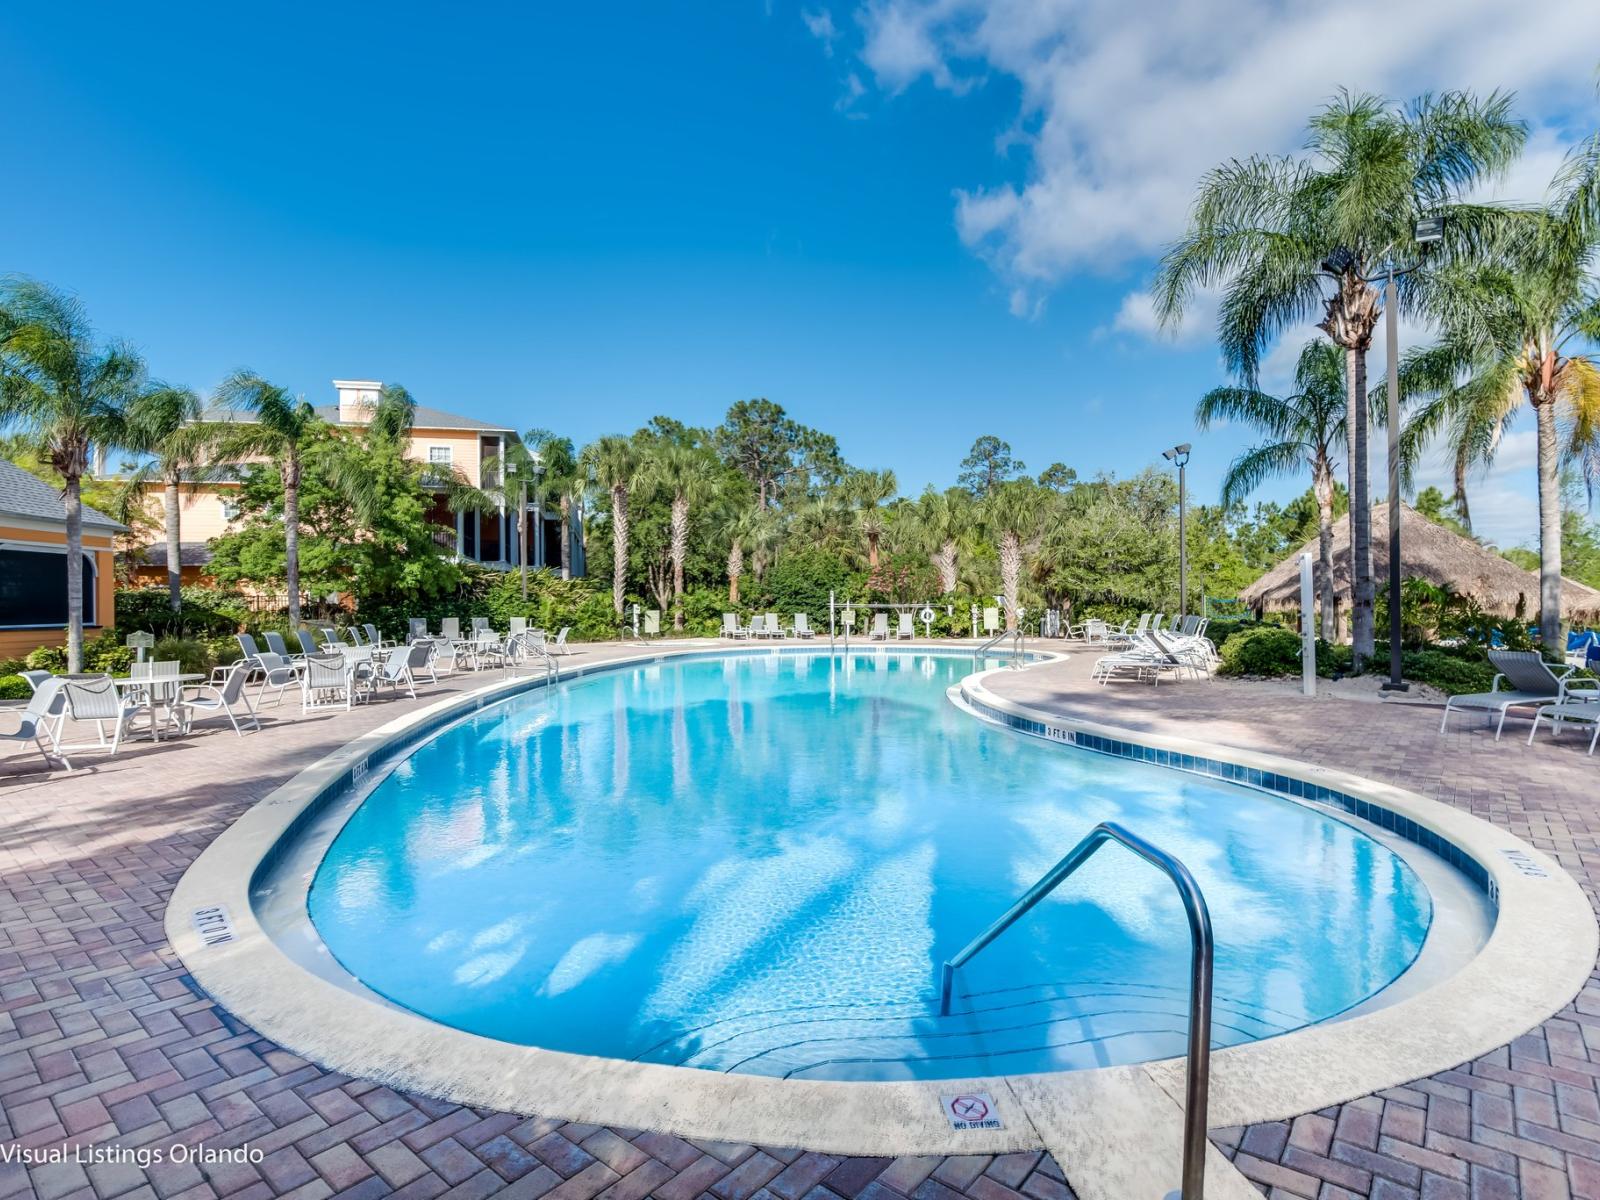 Bahama Bay resort pool